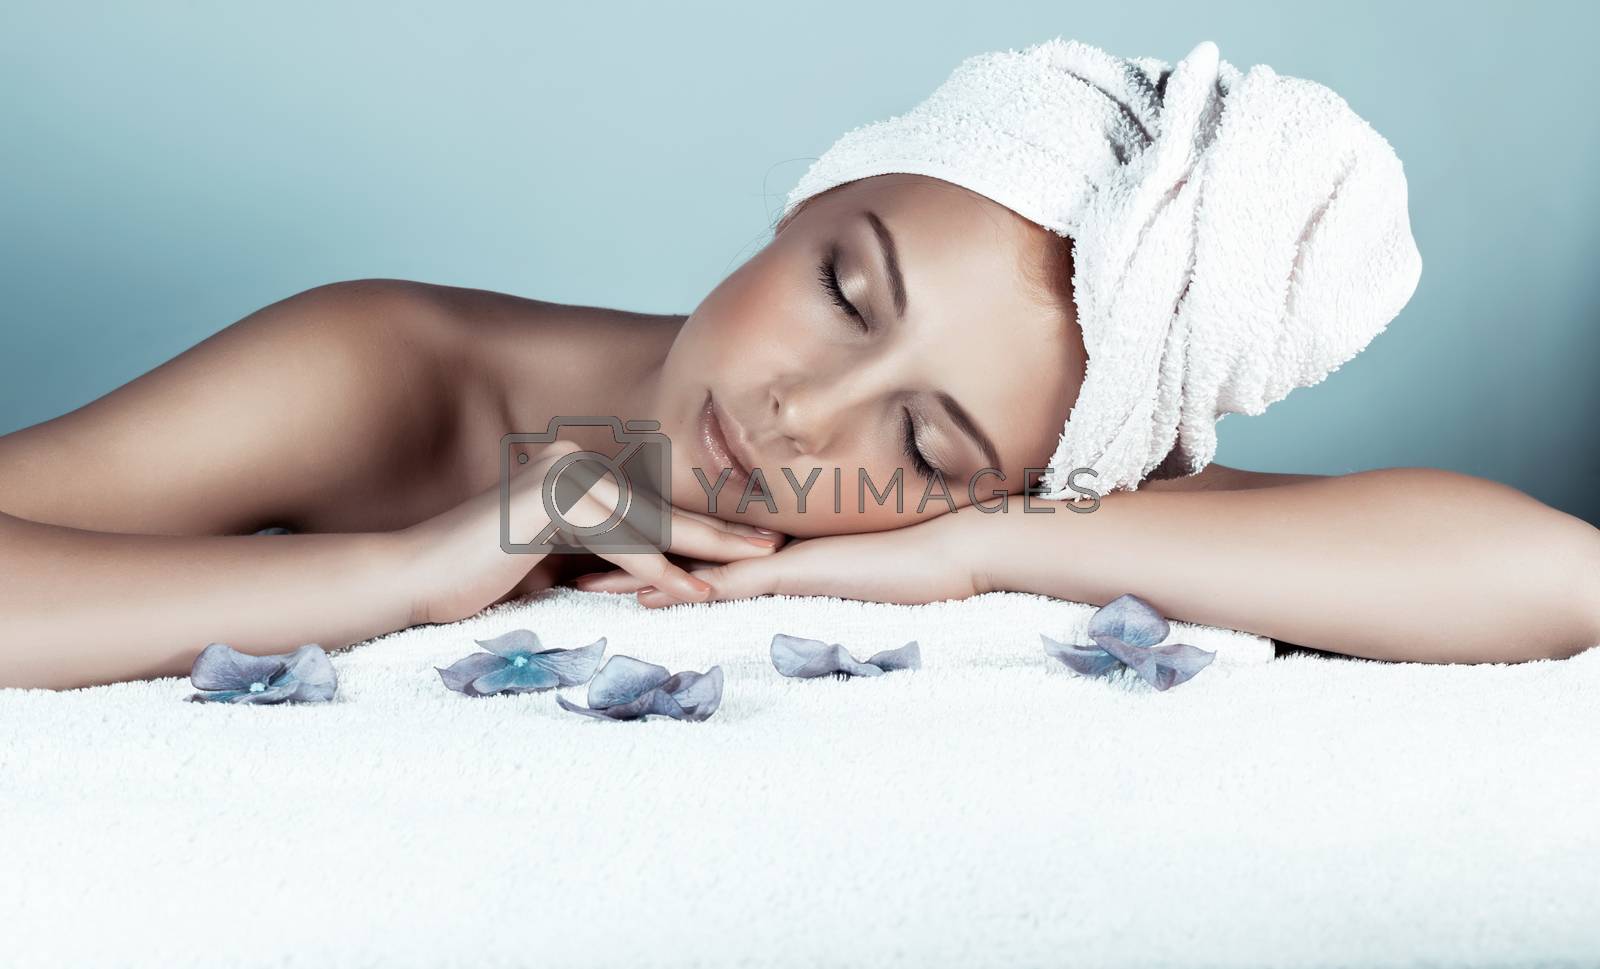 Royalty free image of Enjoying day spa by Anna_Omelchenko